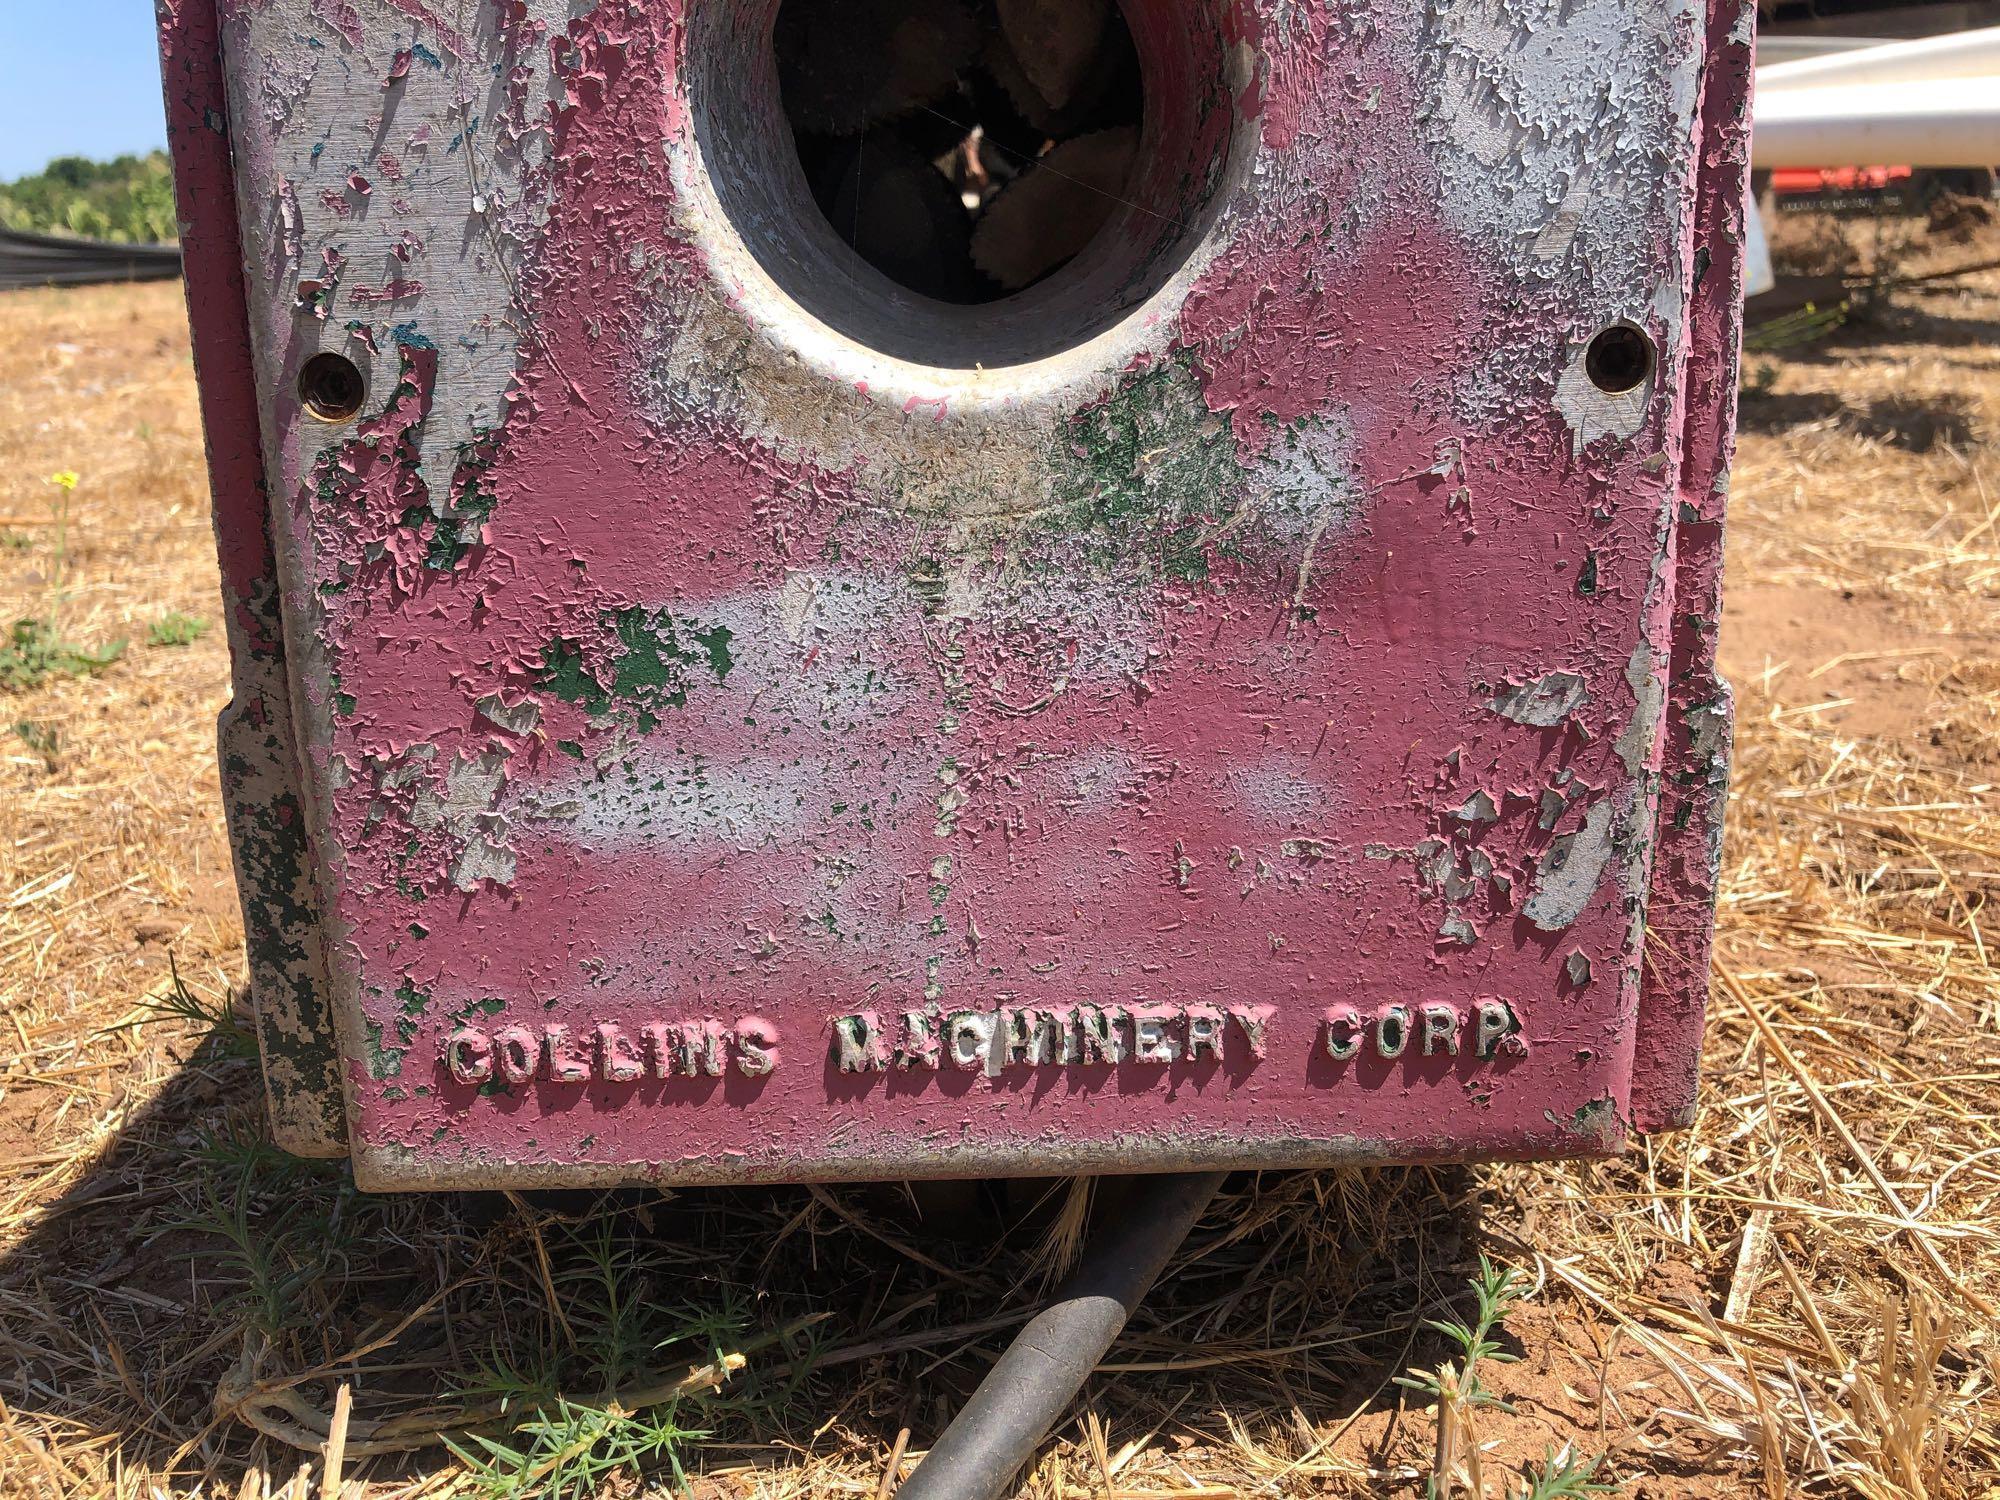 Old Machine Collins Machinery Corp.